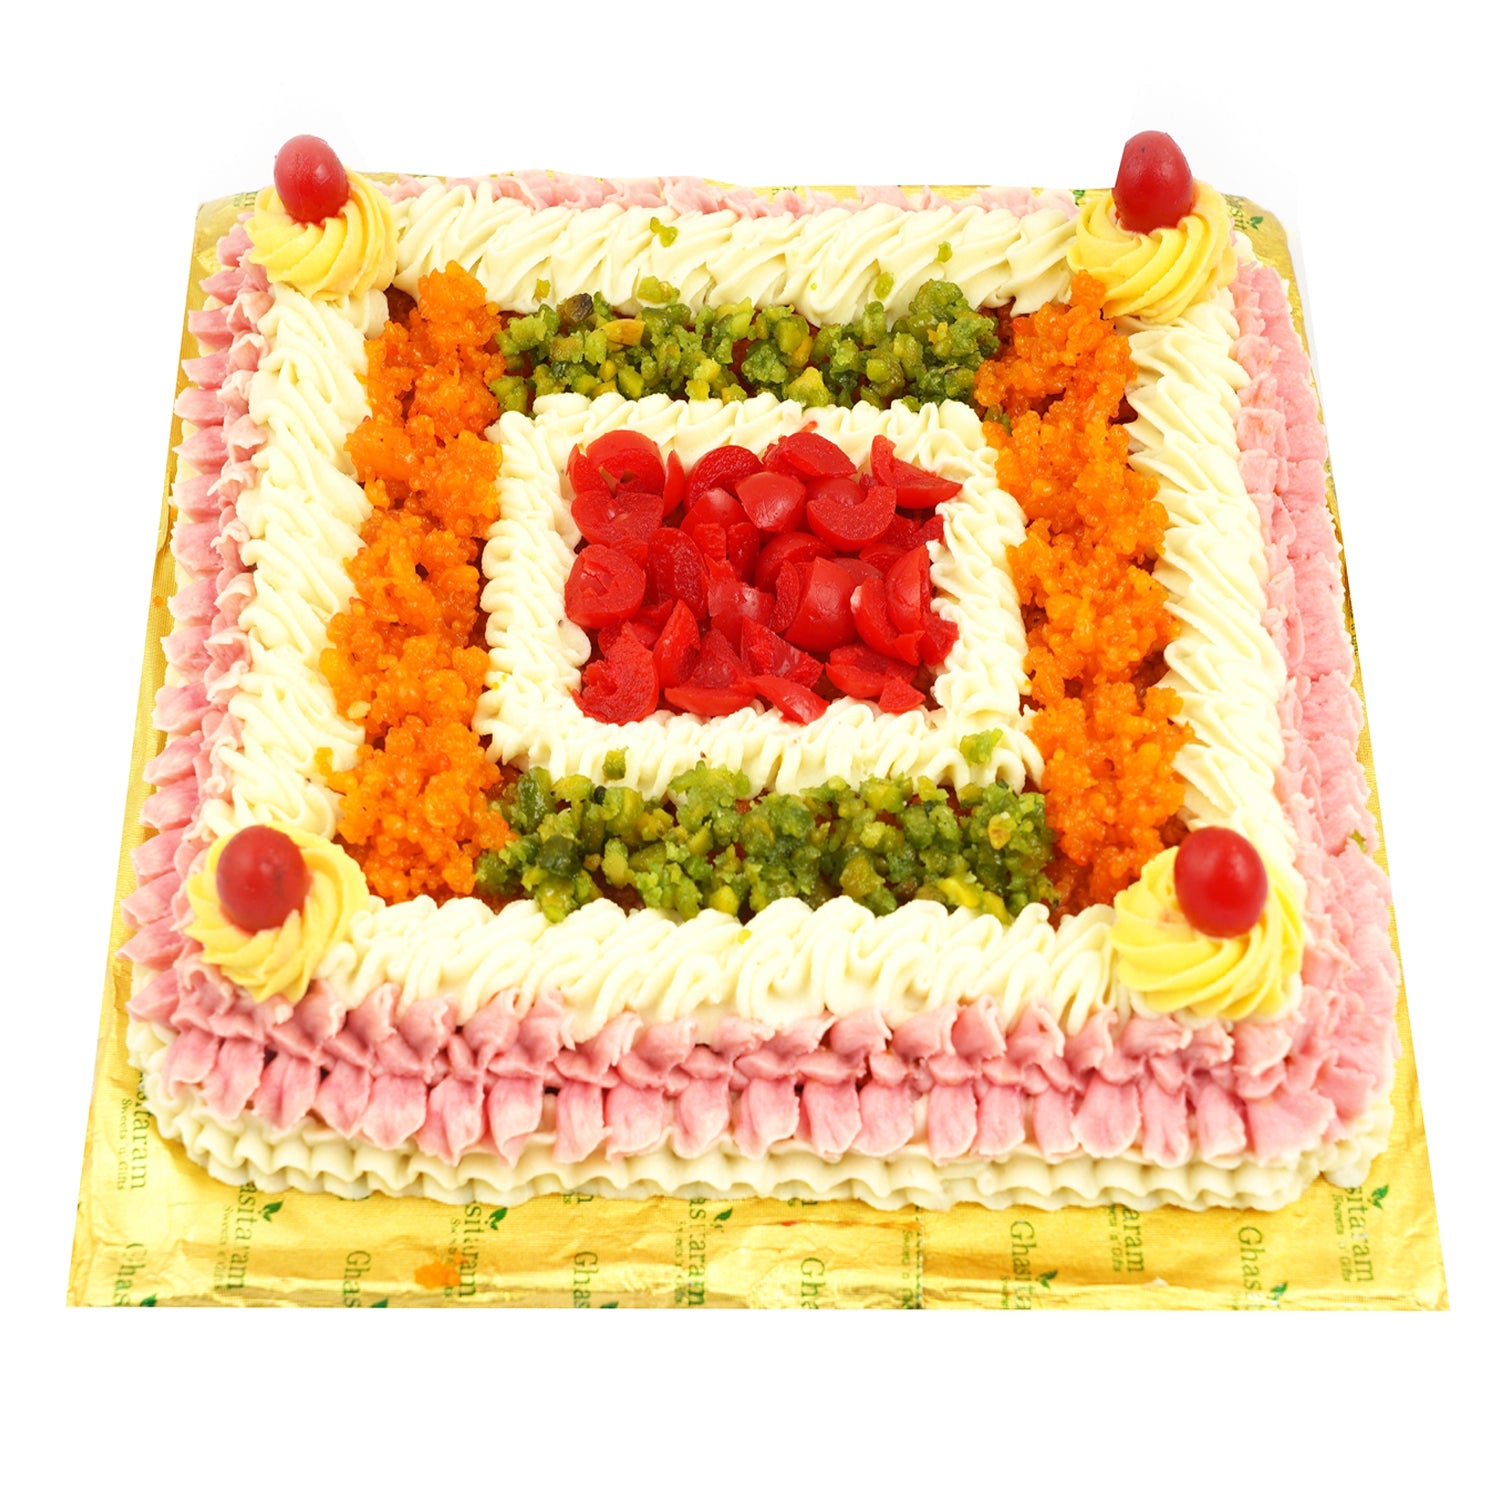 Tutti frutti cake recipe (Bakery style) - Swasthi's Recipes